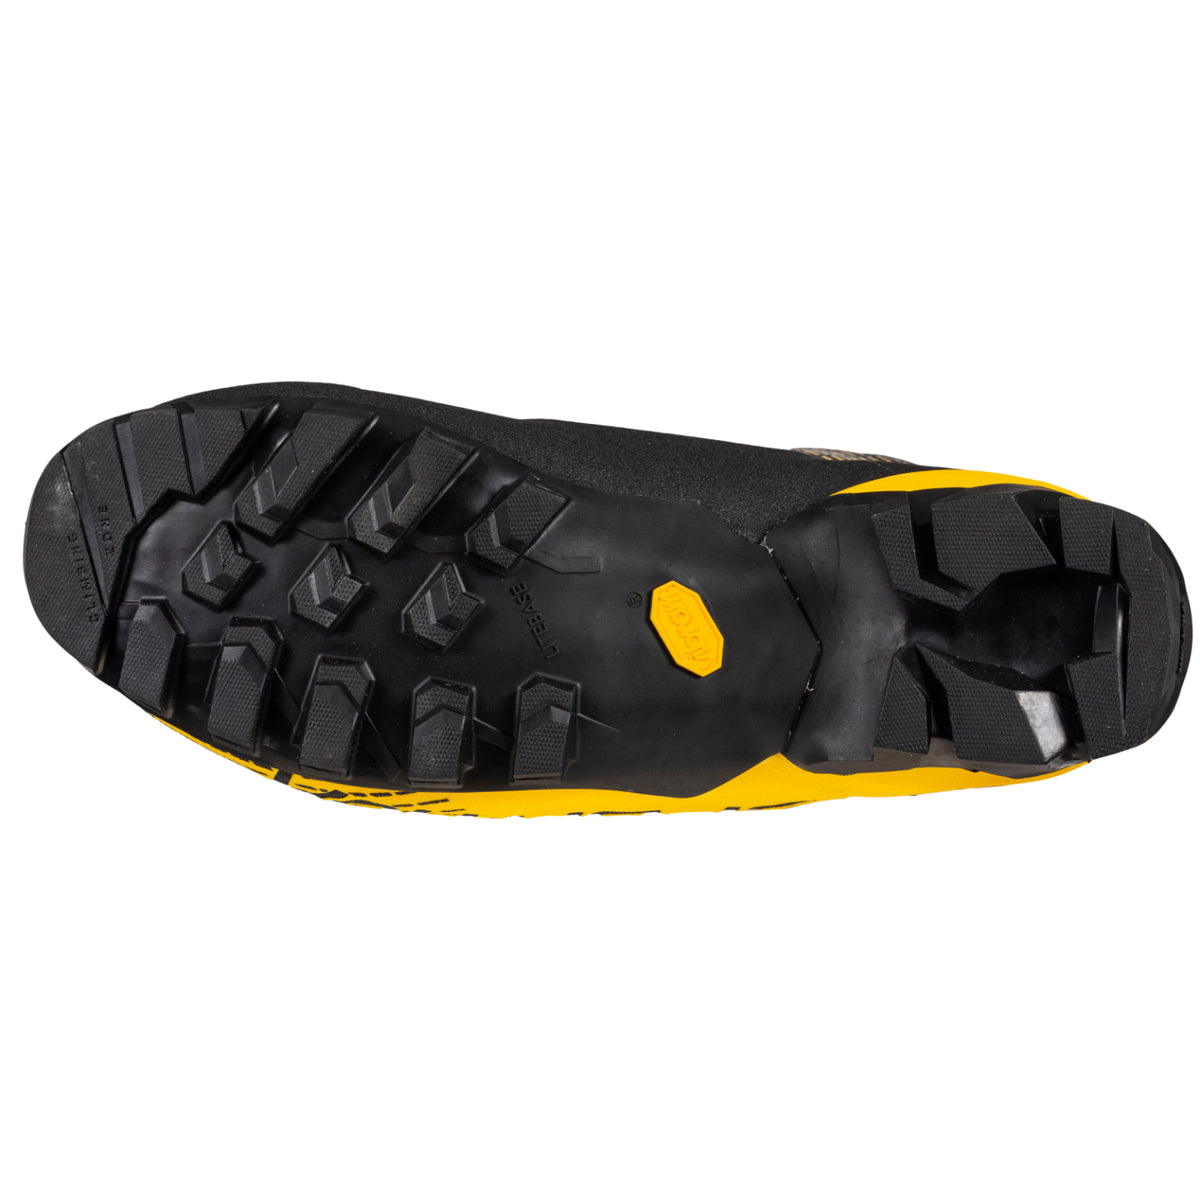 La Sportiva G-Tech mountaineering boots Vibram sole unit